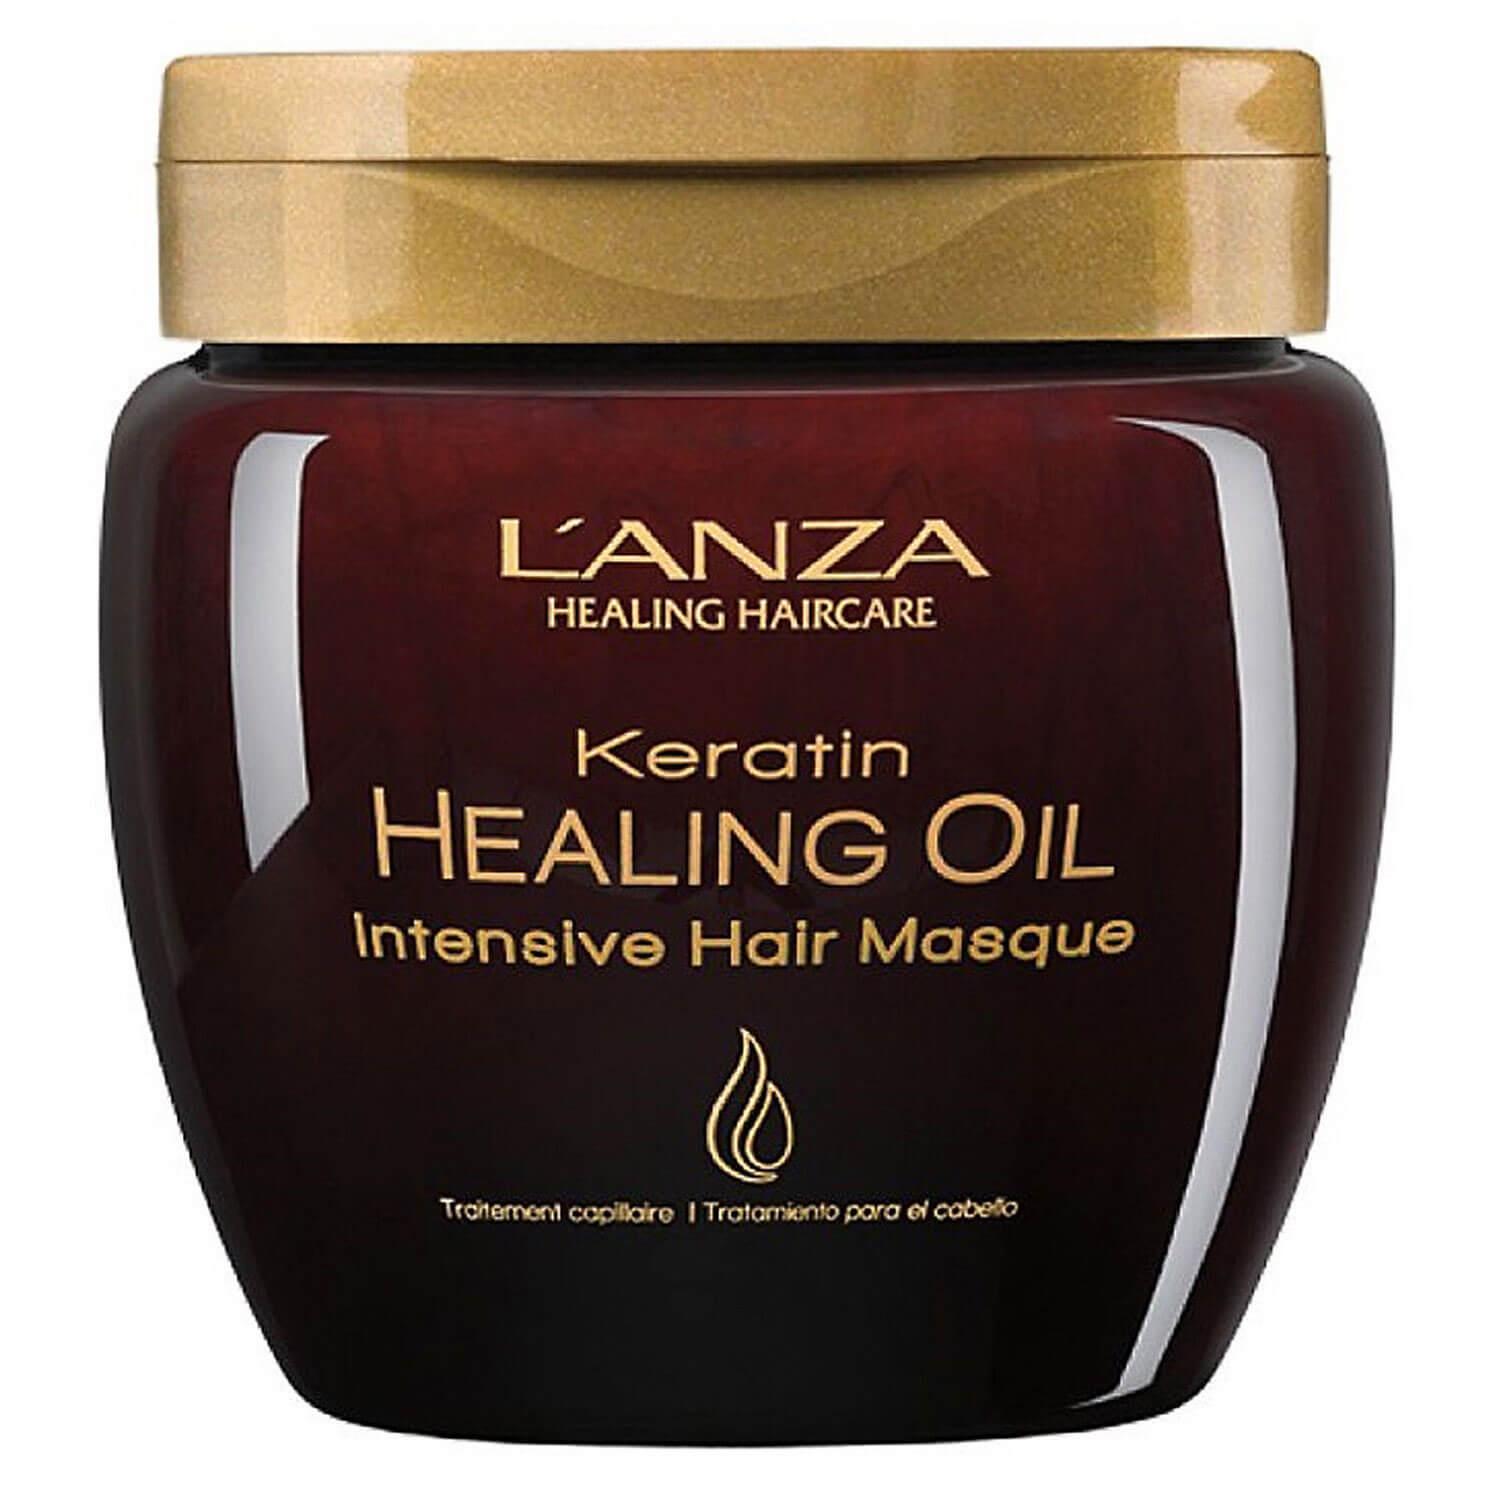 Keratin Healing Oil - Intensive Hair Mask